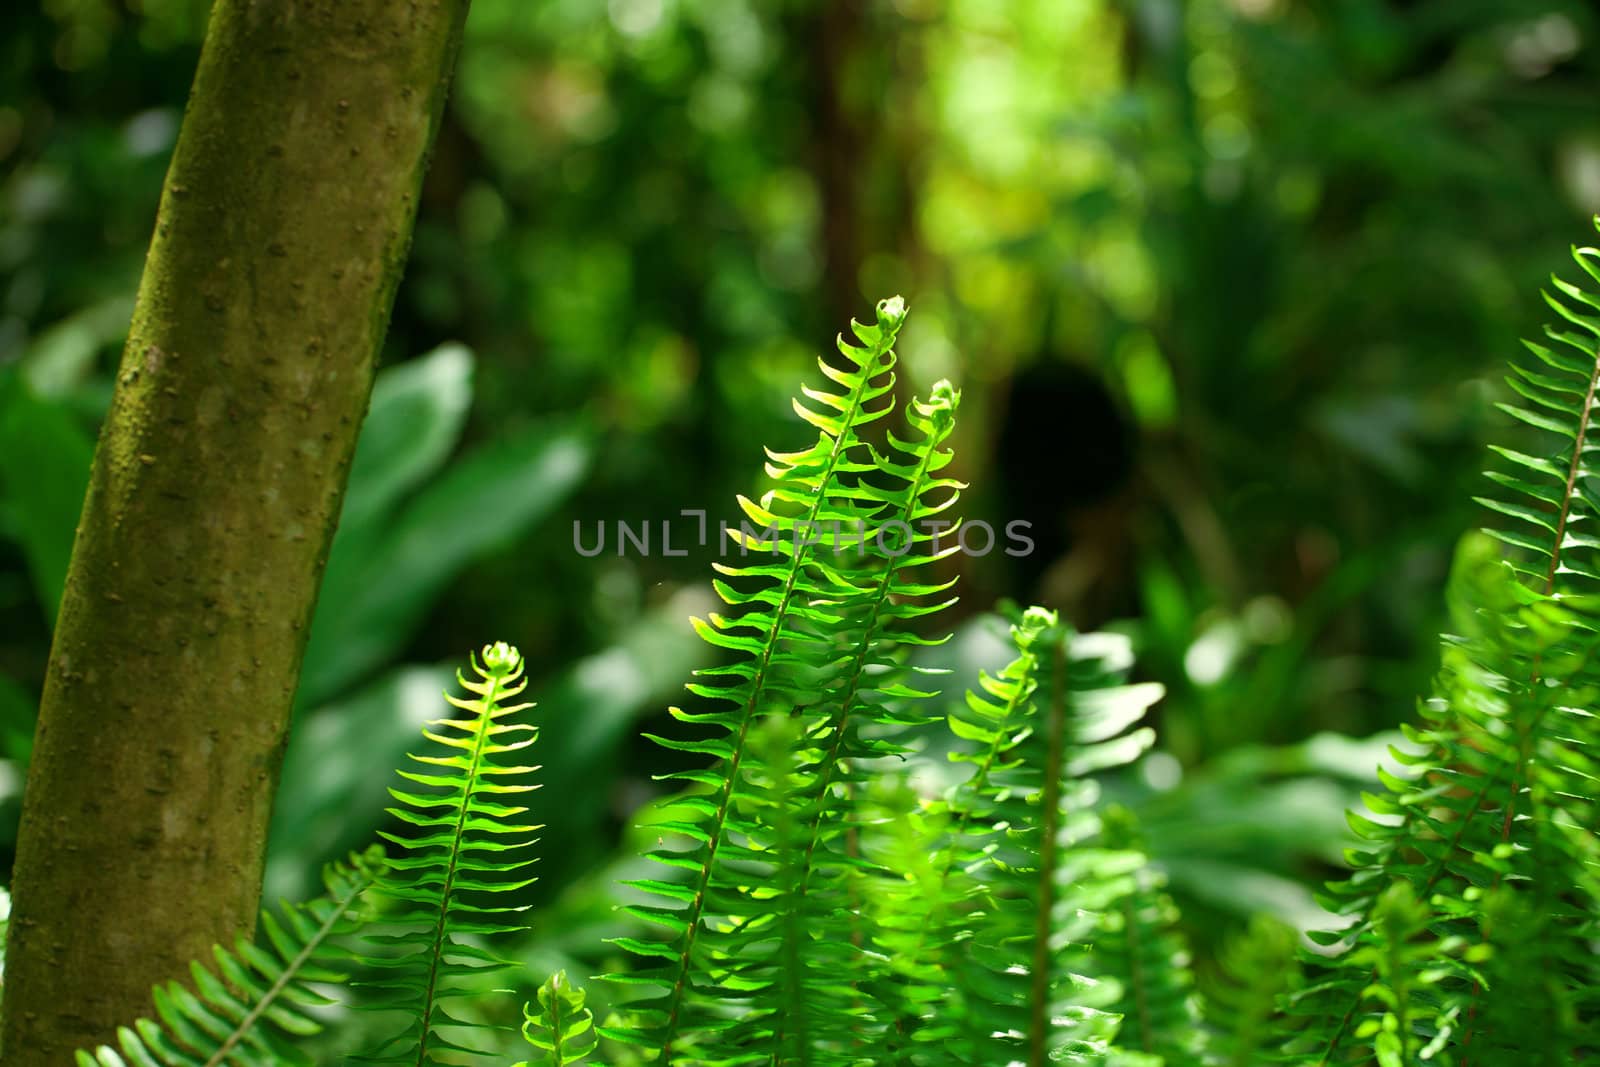 fern in the rainforest